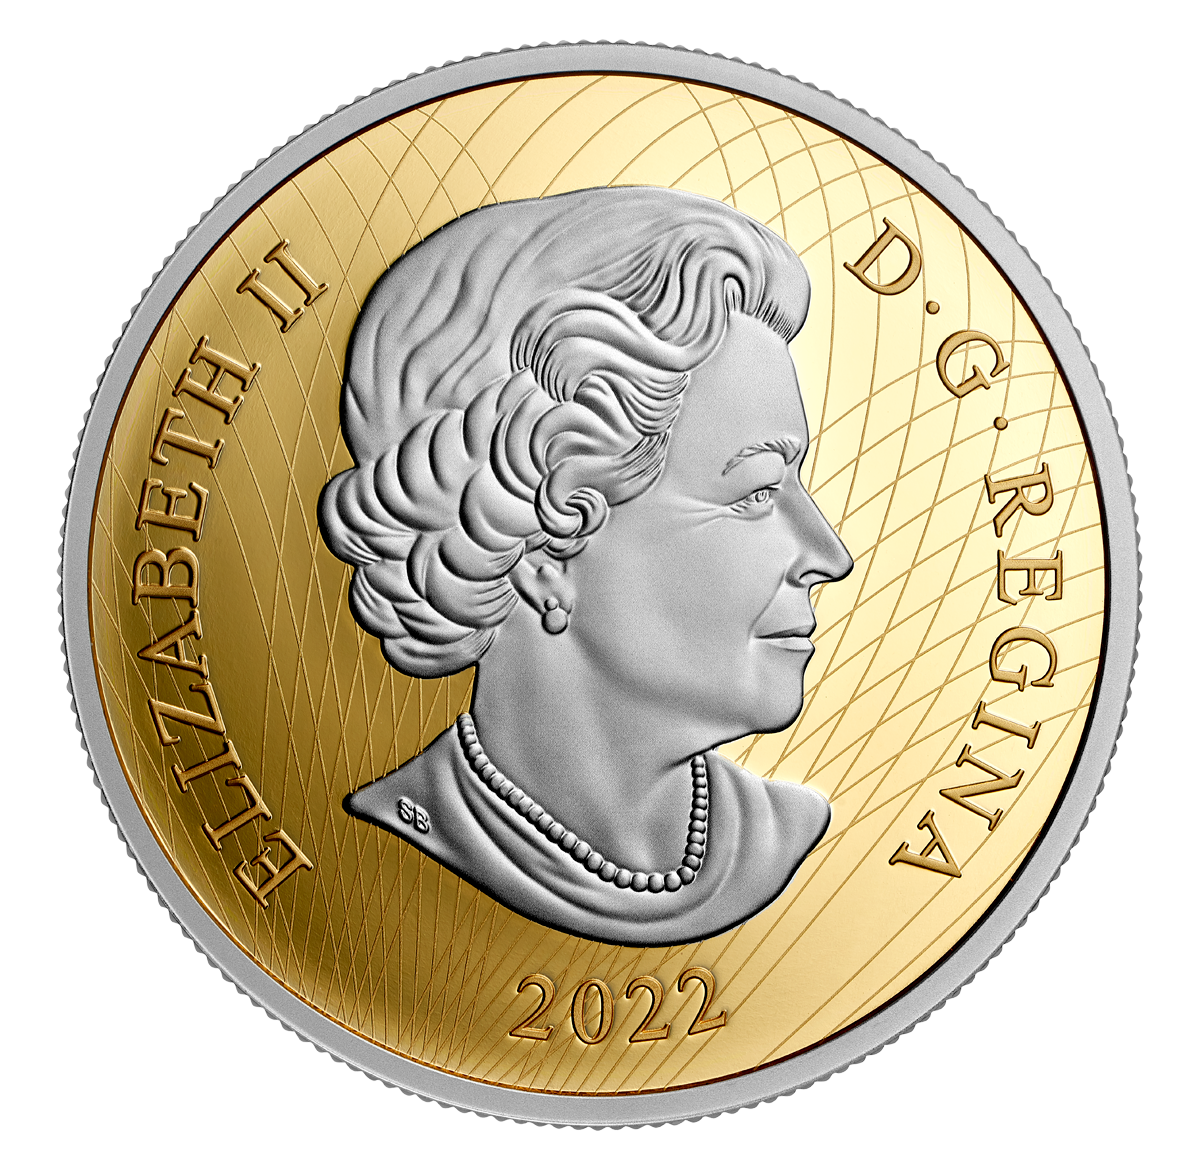 2 oz. Pure Gold Coin – Her Majesty Queen Elizabeth II's Diamond